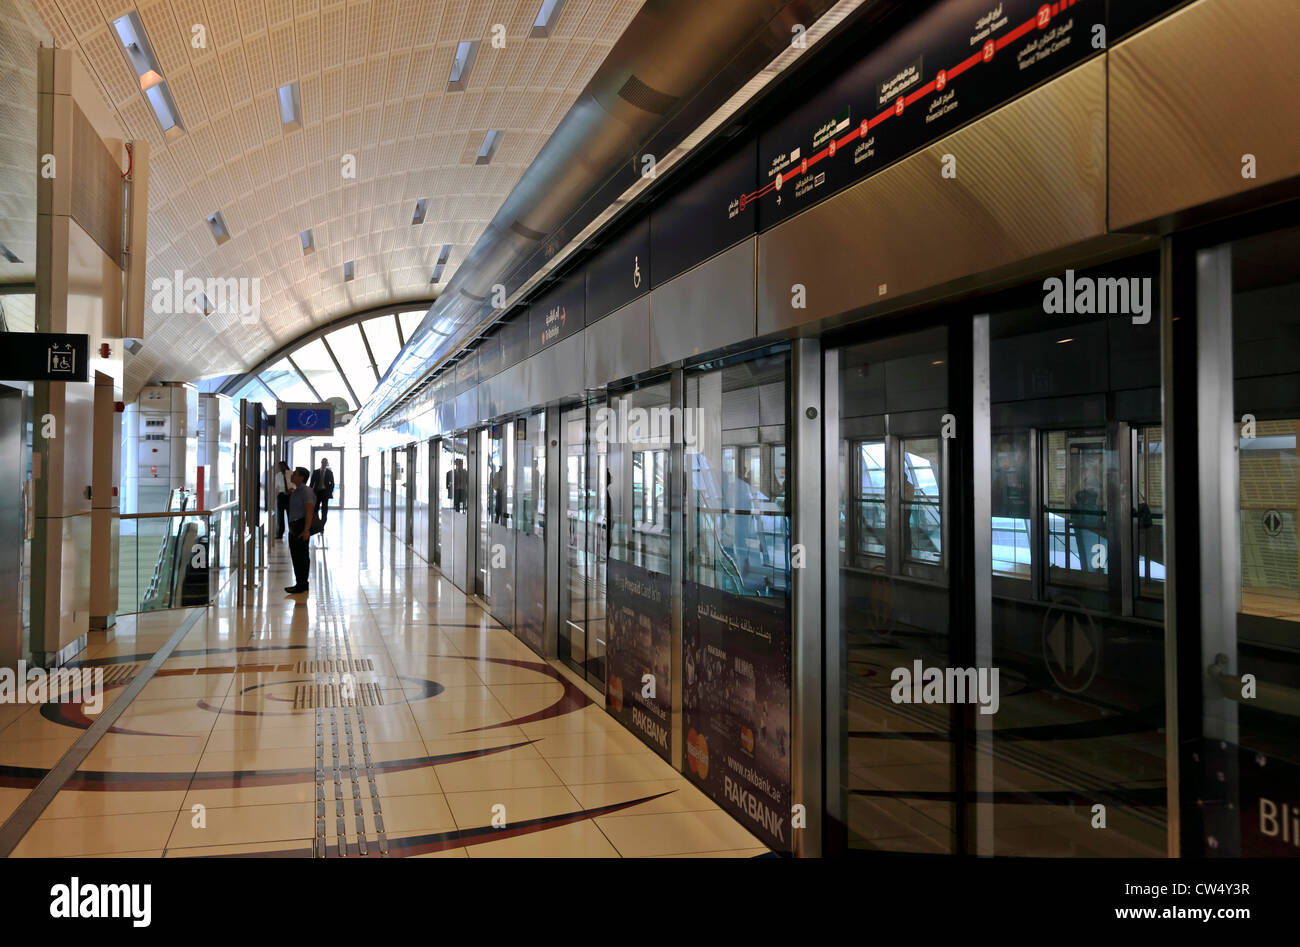 3663. Air conditioned station, Metro, Dubai, UAE. Stock Photo